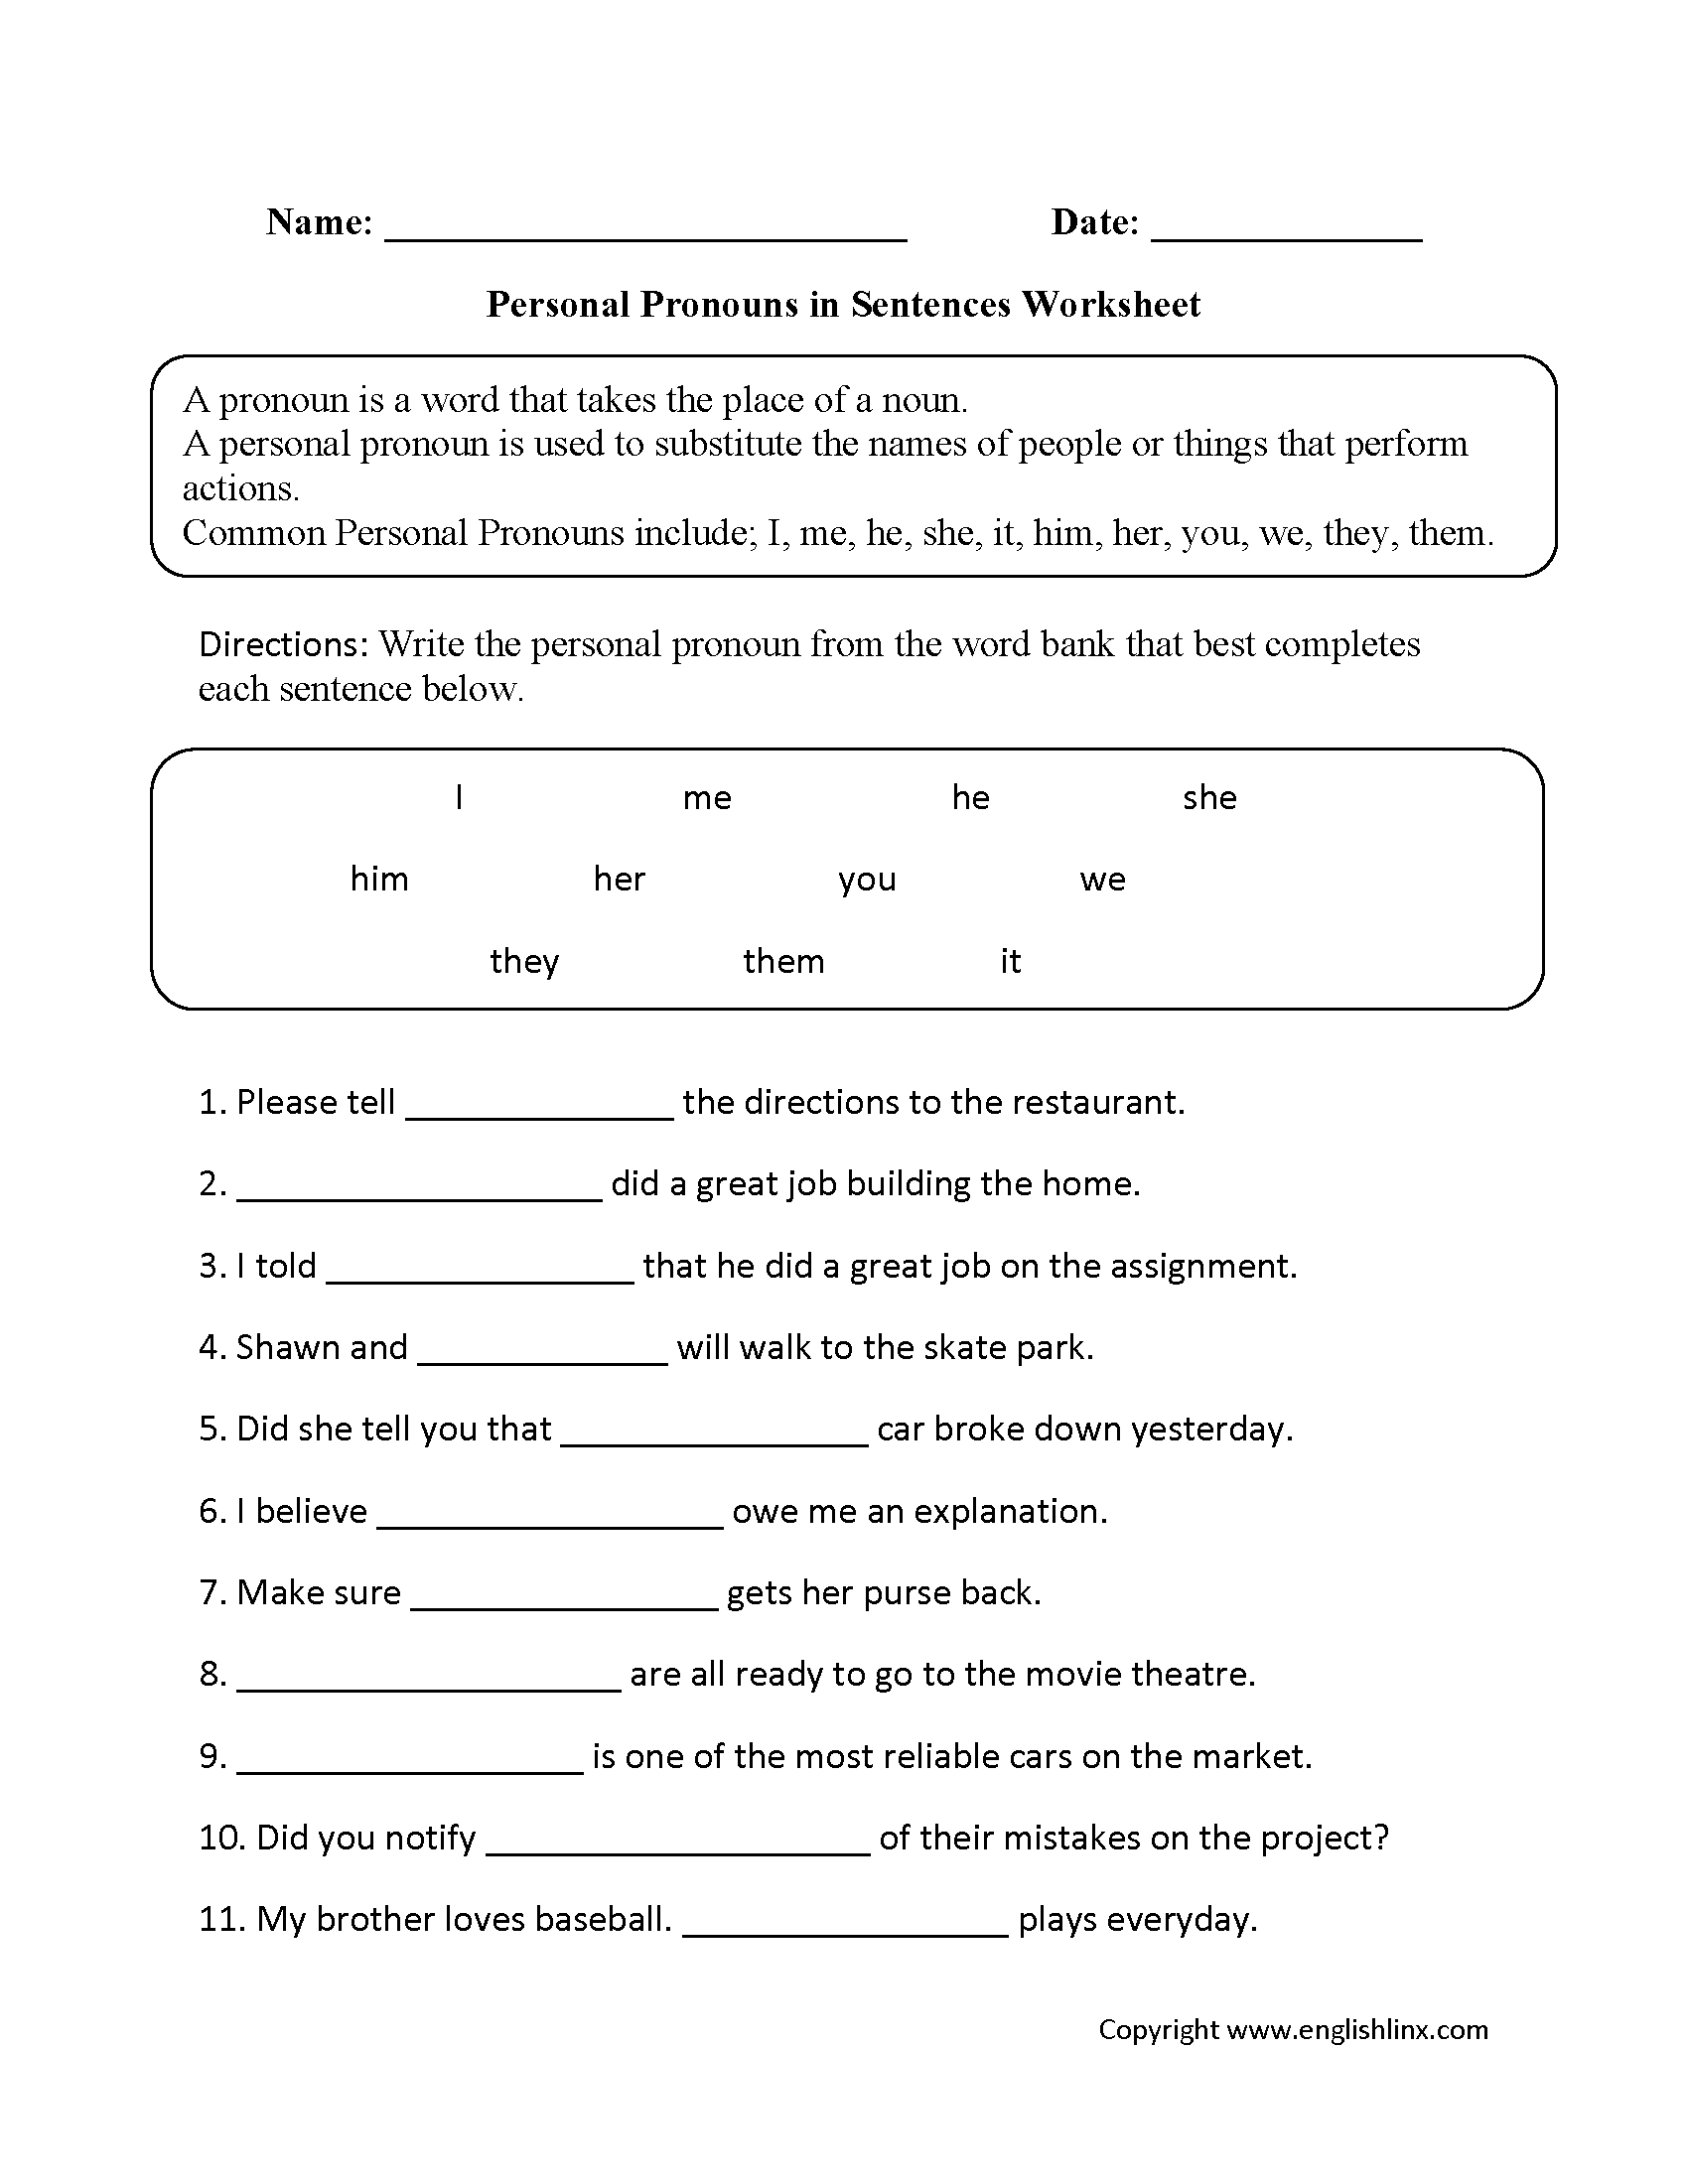 Personal Pronouns Worksheets Personal Pronouns In Sentences Worksheets